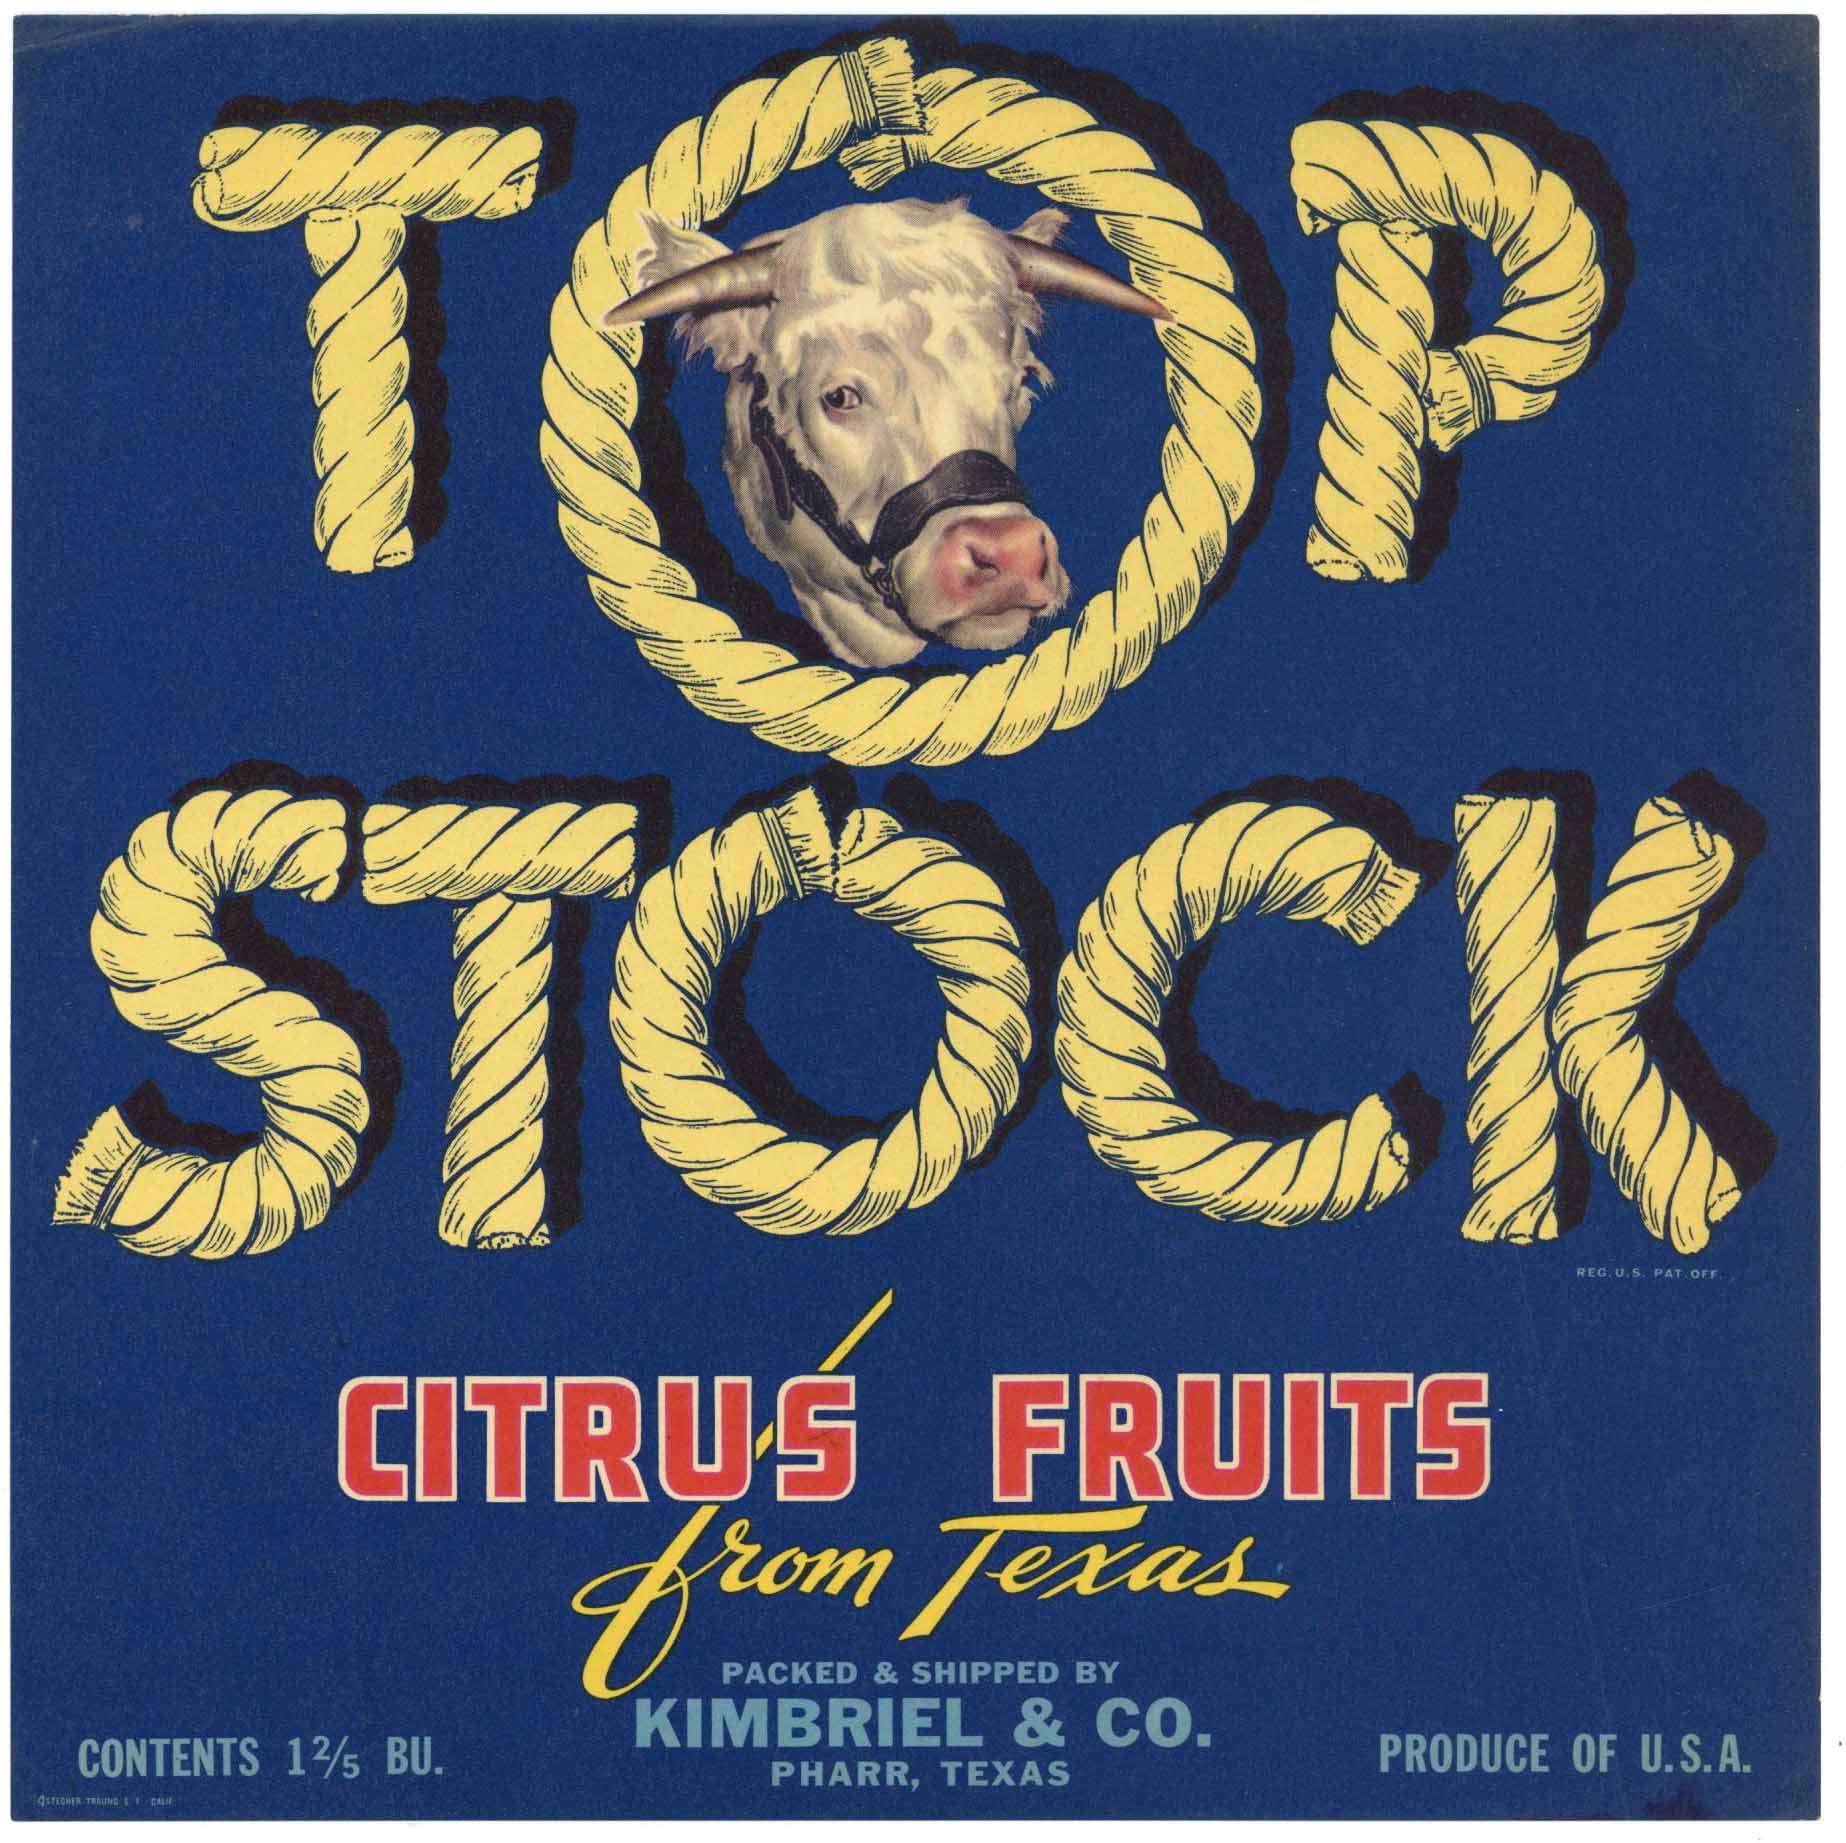 Top Stock Brand Vintage Pharr Texas Citrus Crate Label